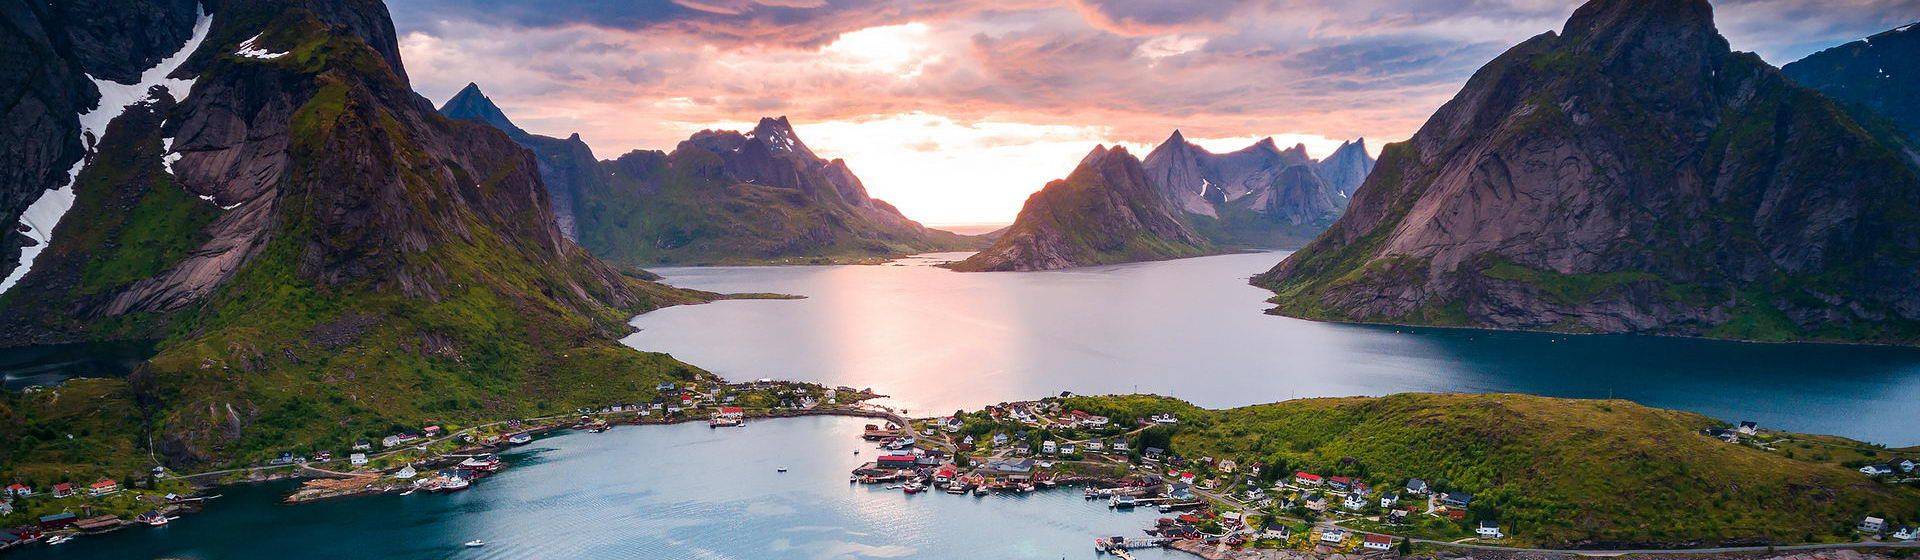 Holidays to Norway Image